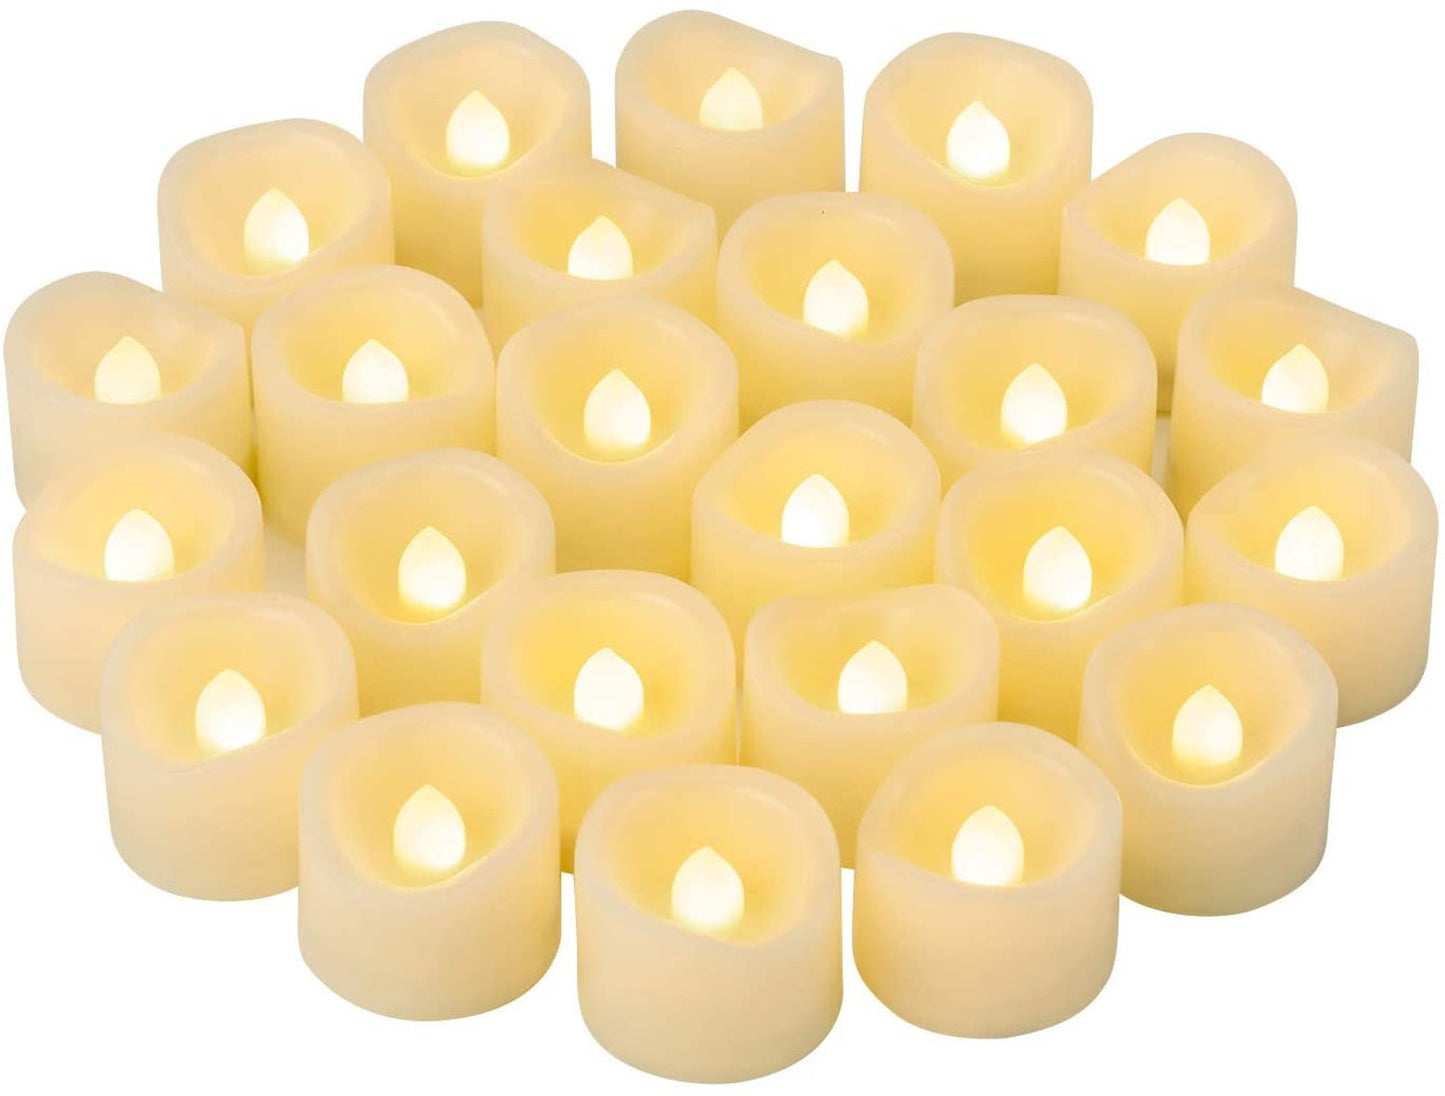 LED Flameless Flickering Tea Lights - Warm White